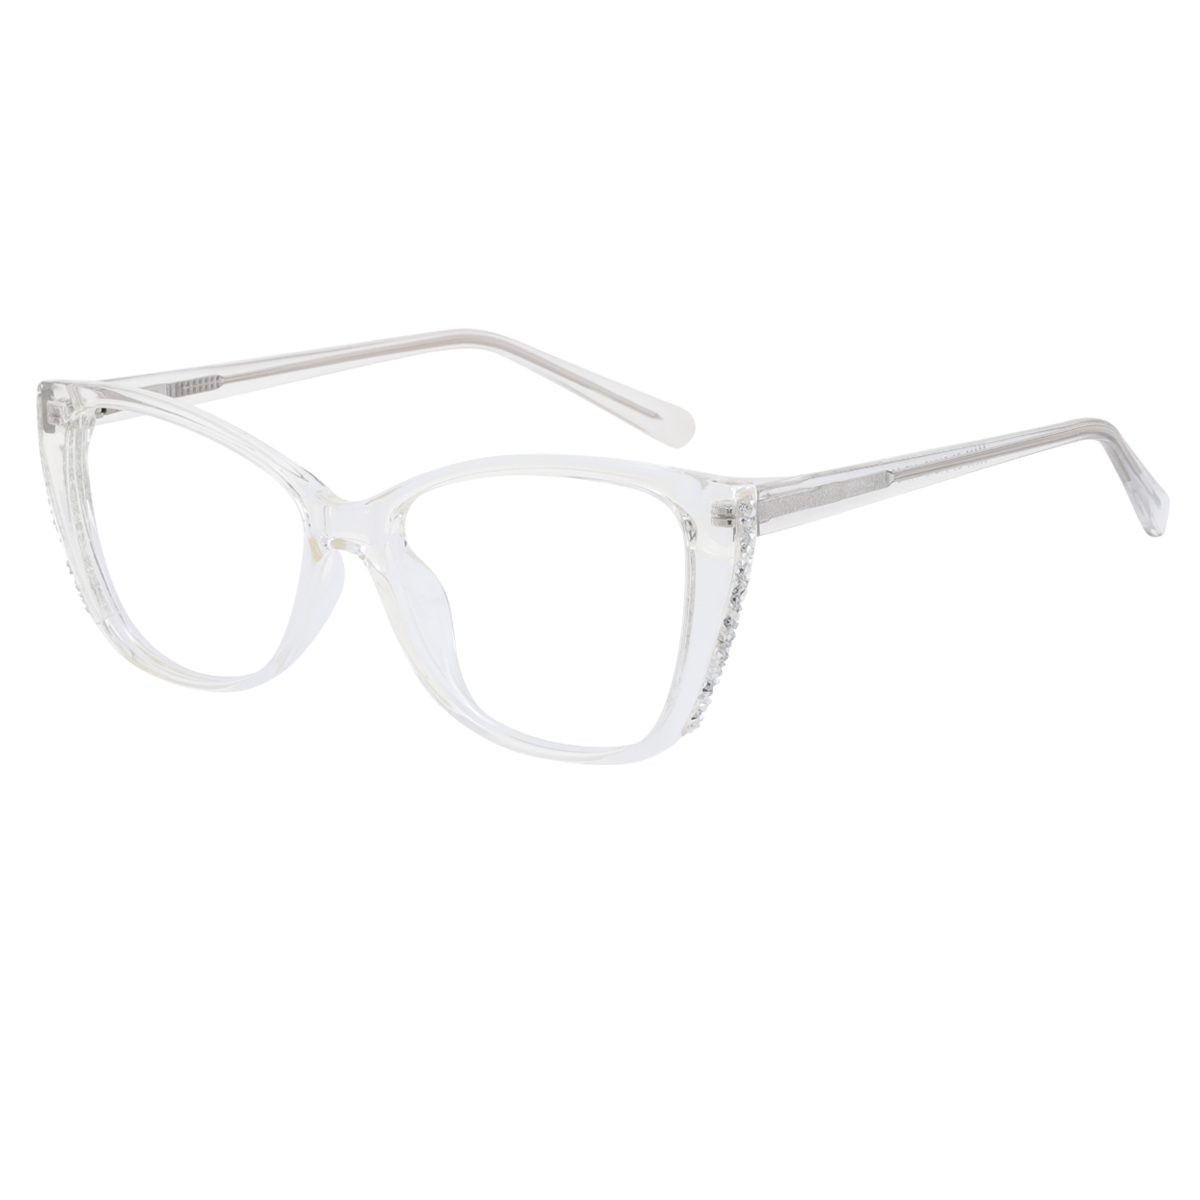 Cathie - Square Transparent Reading Glasses for Women